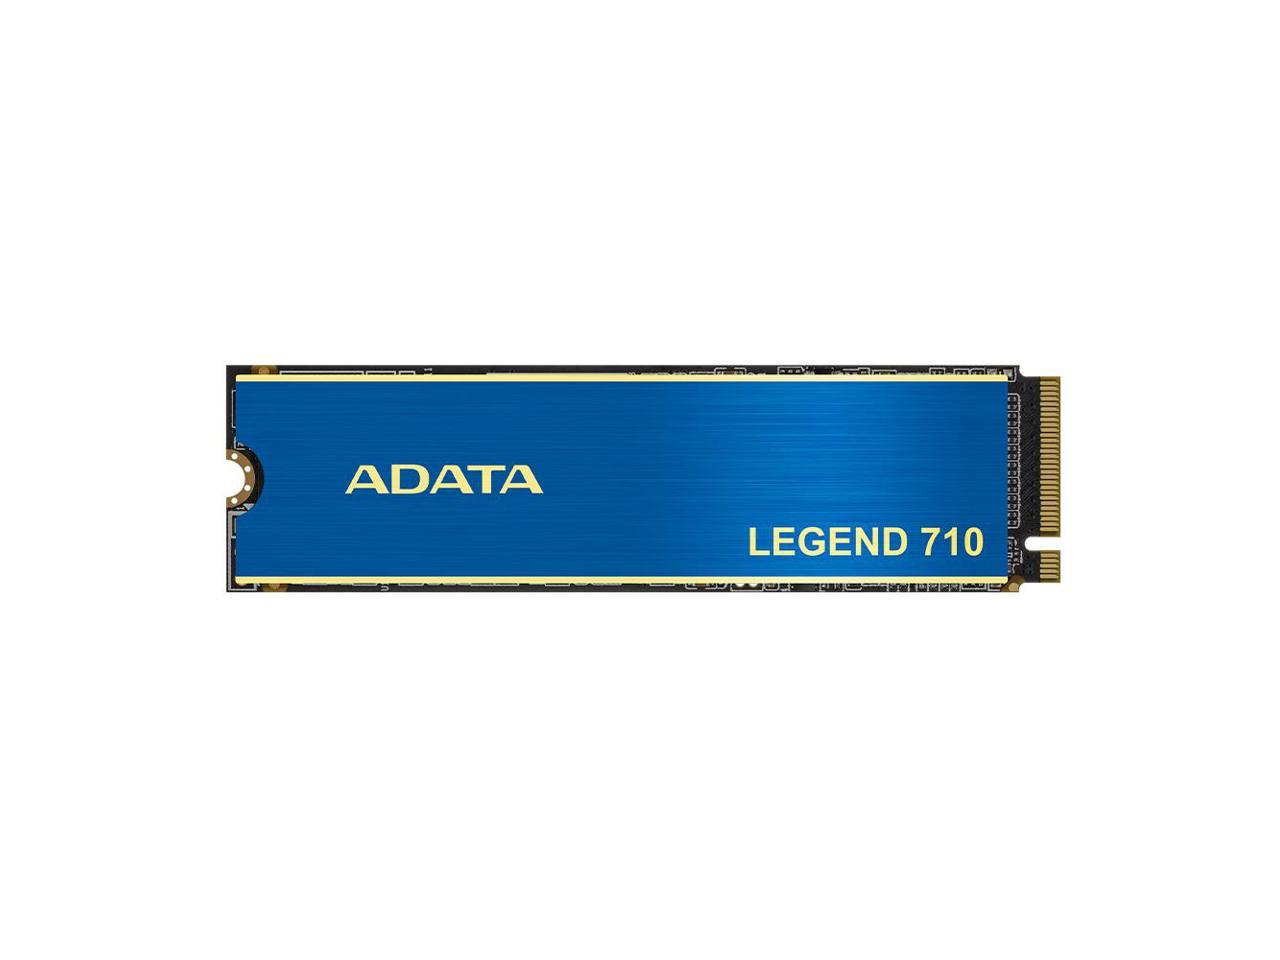 1TB AData Legend 710 PCIe Gen3 x4 M.2 2280 SSD Solid State Disk